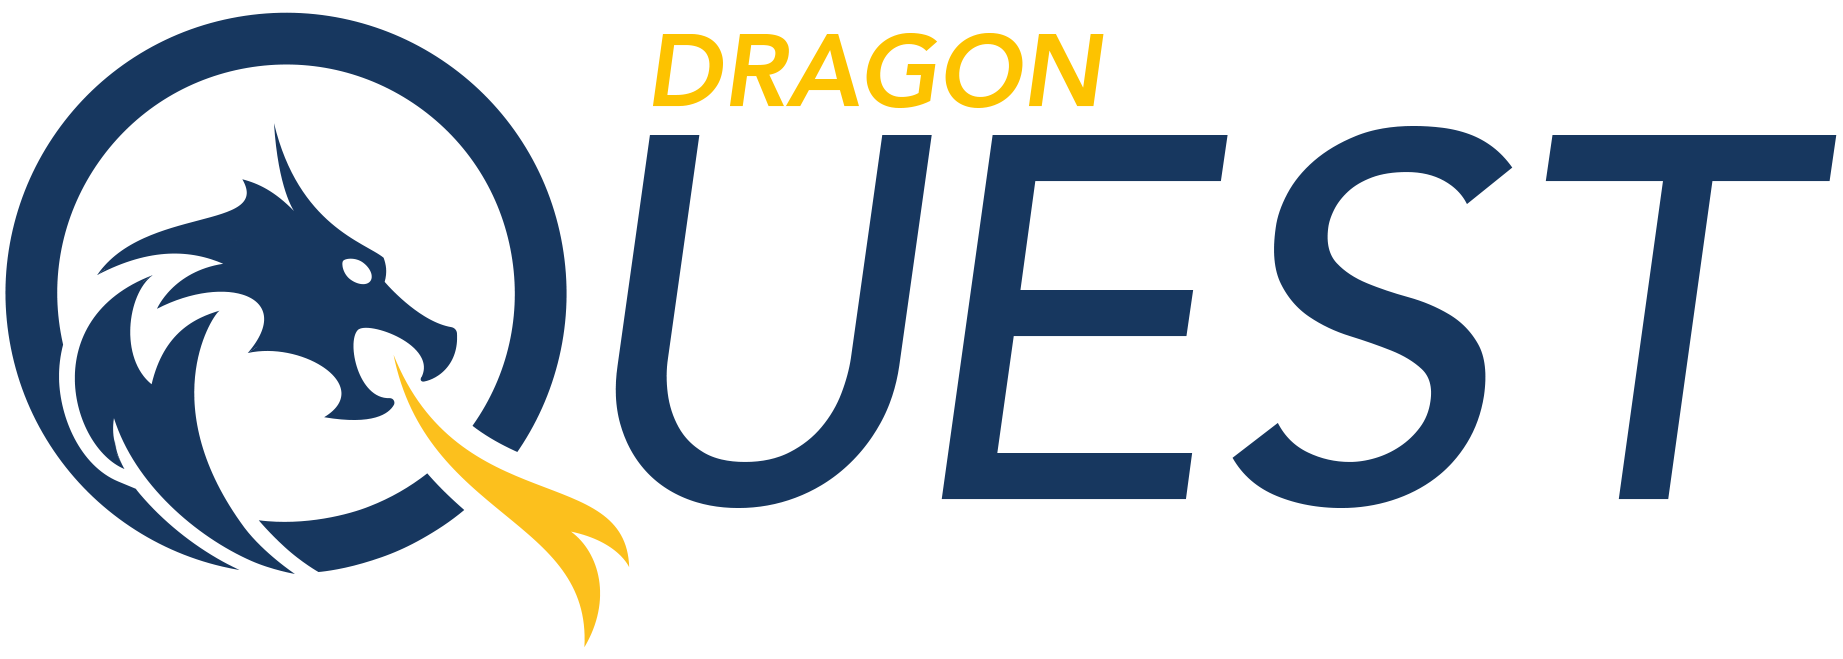 Dragon Quest Brochure - Burst Design Project - Burst Design